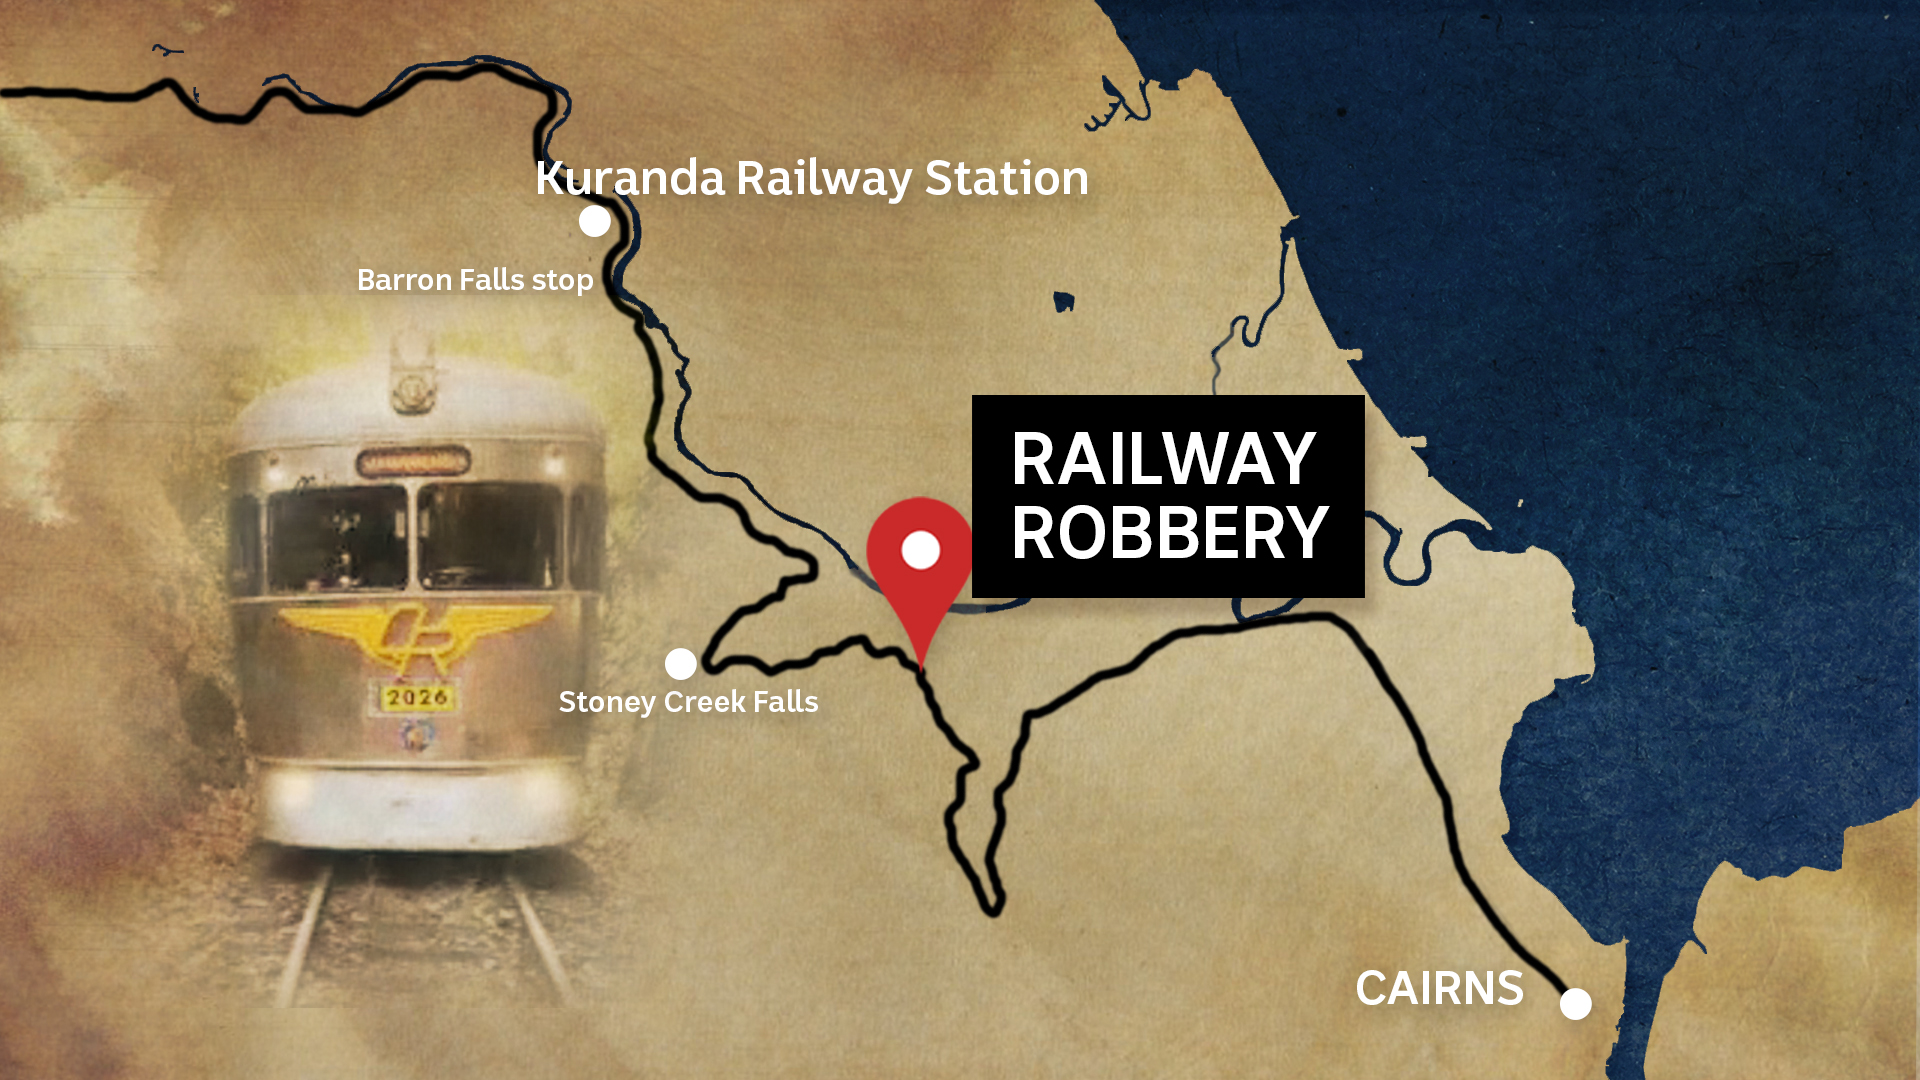 A map marking the locations of the Kuranda railway line, Cairns, the robbery location, Kuranda station.